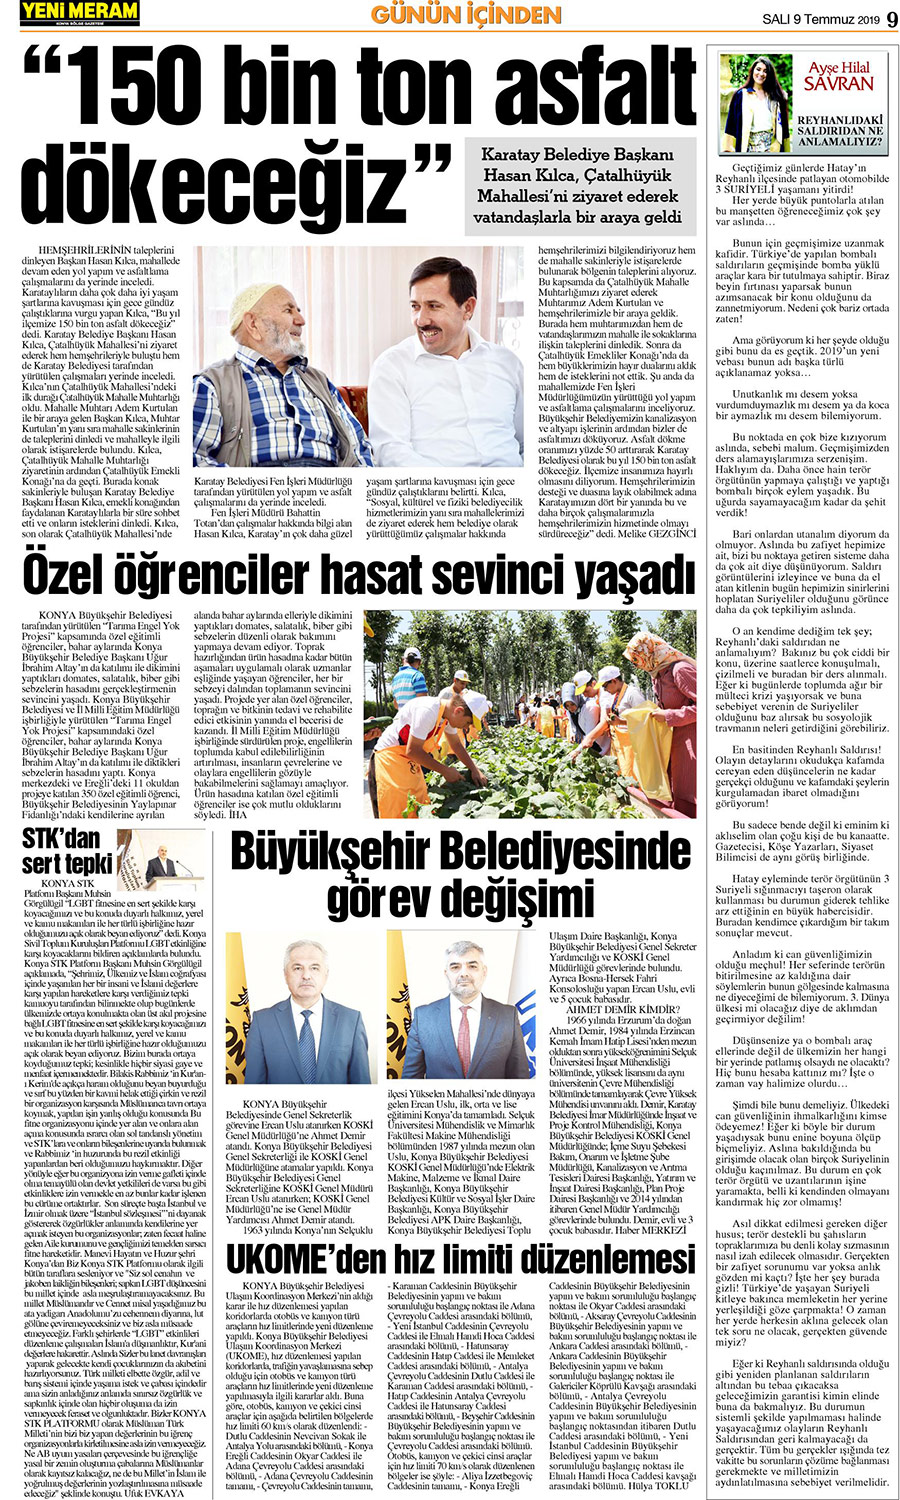 9 Temmuz 2019 Yeni Meram Gazetesi